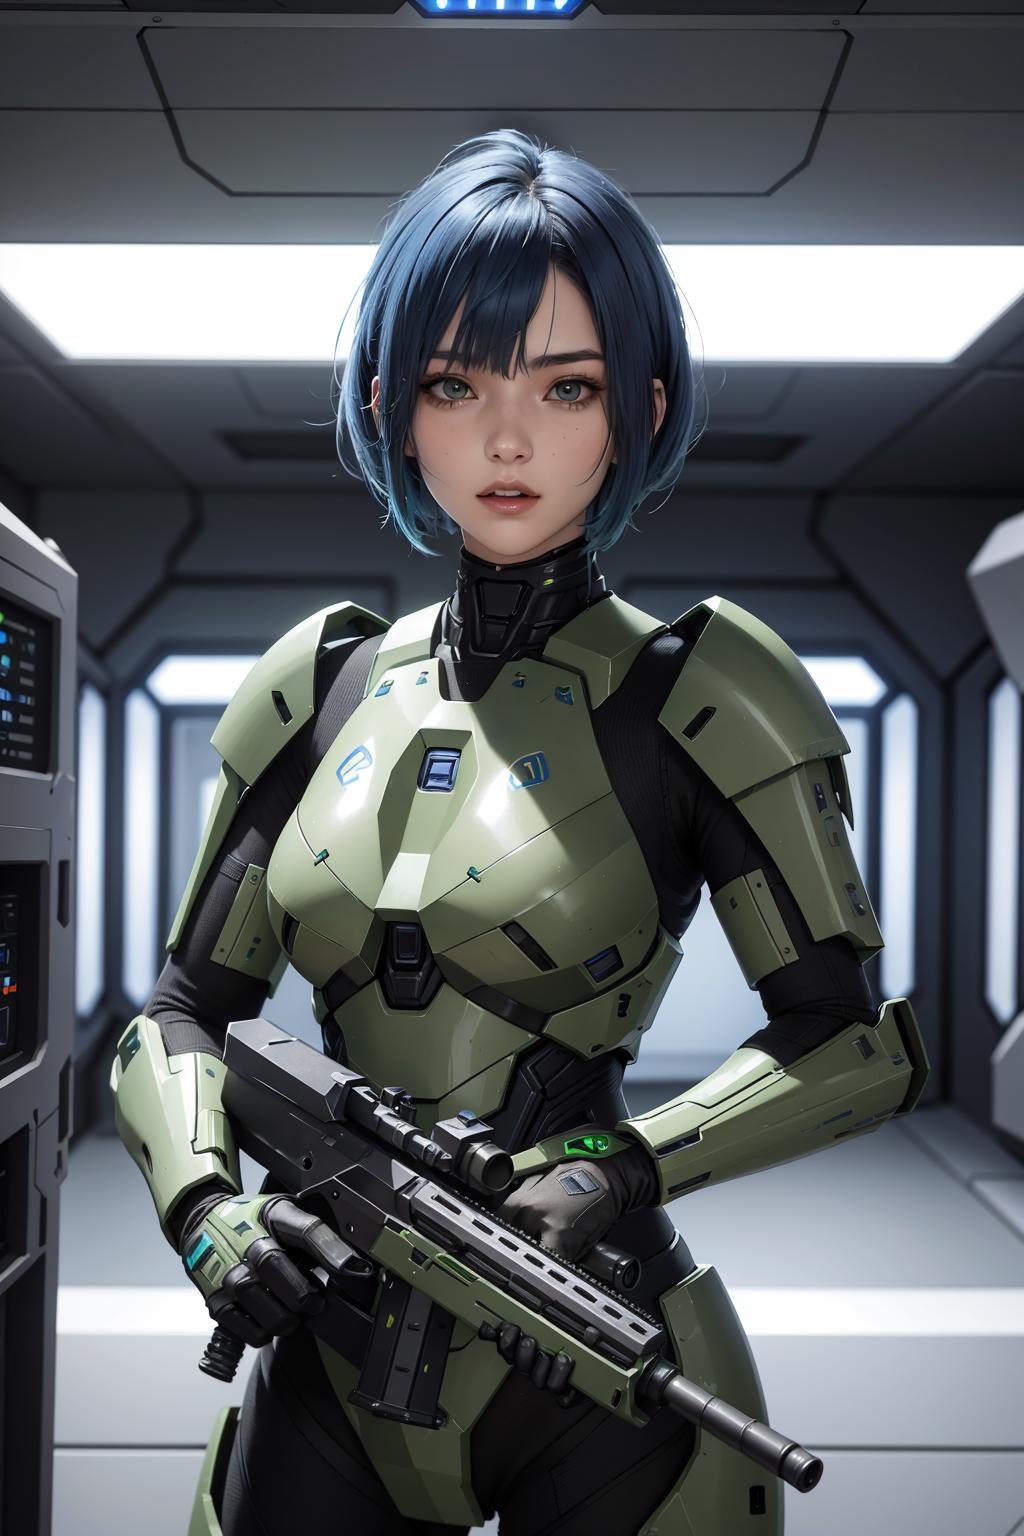 AI model image by mangaka92